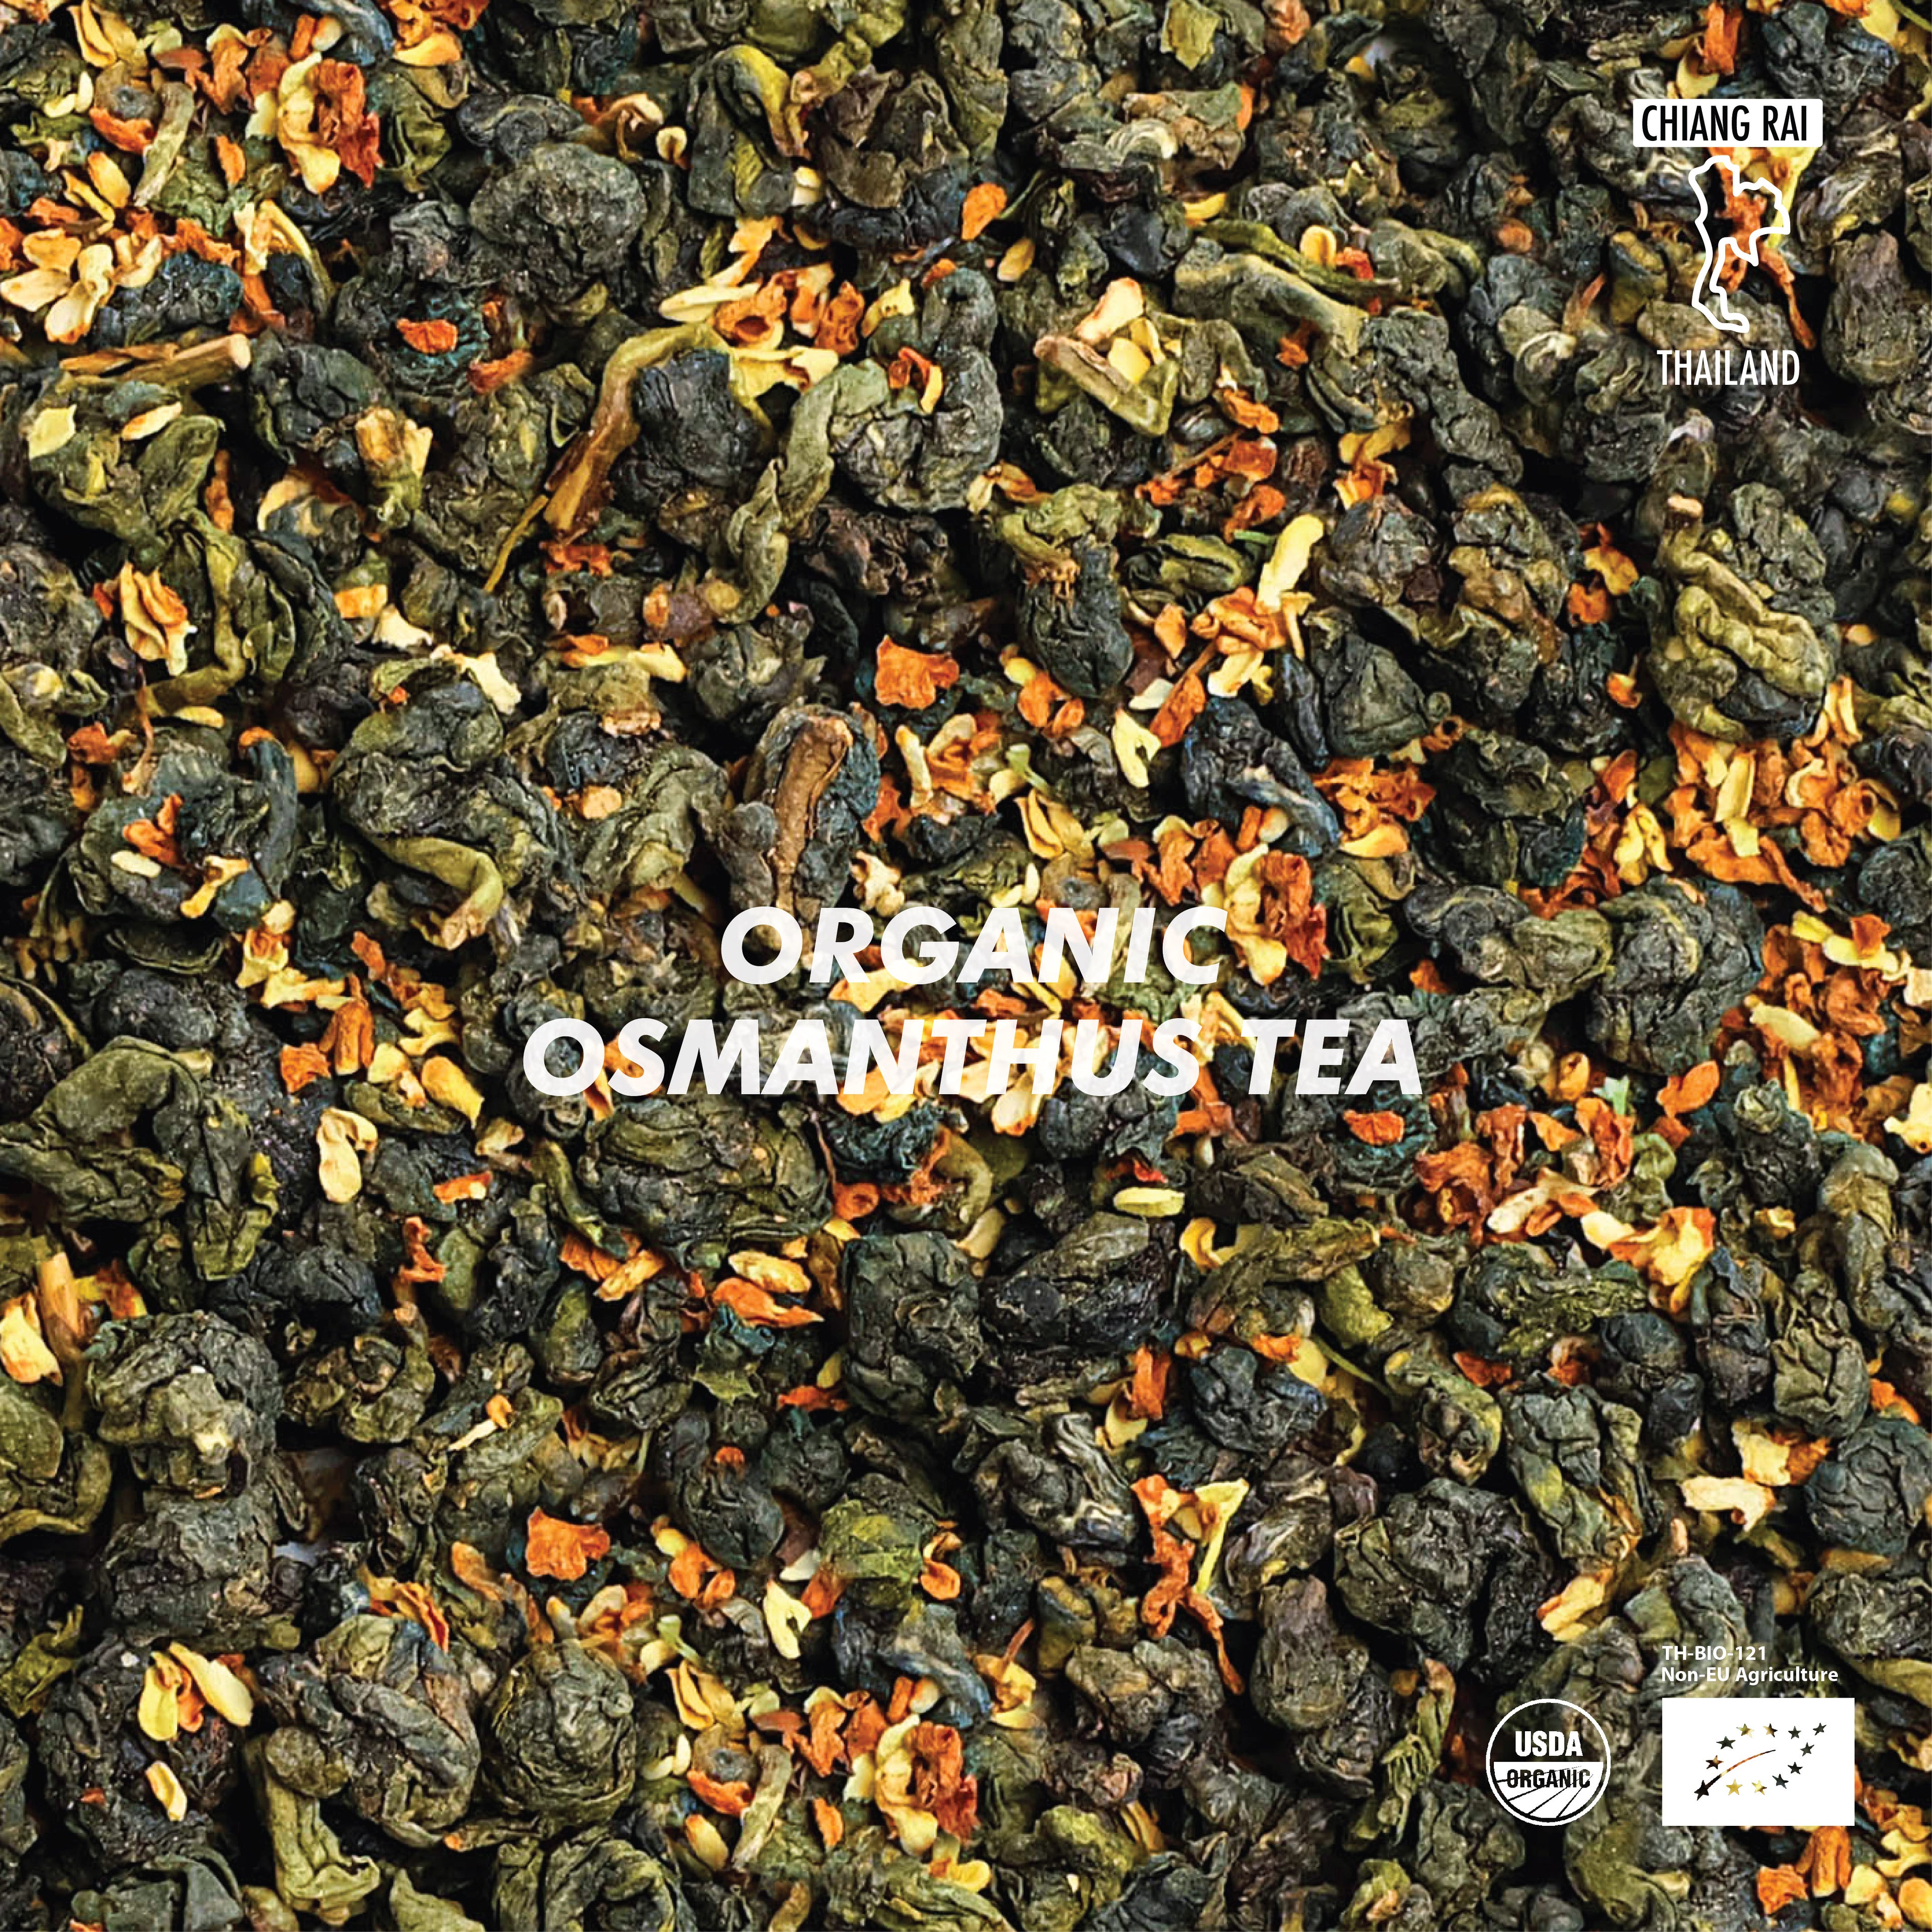 Organic Osmanthus Tea